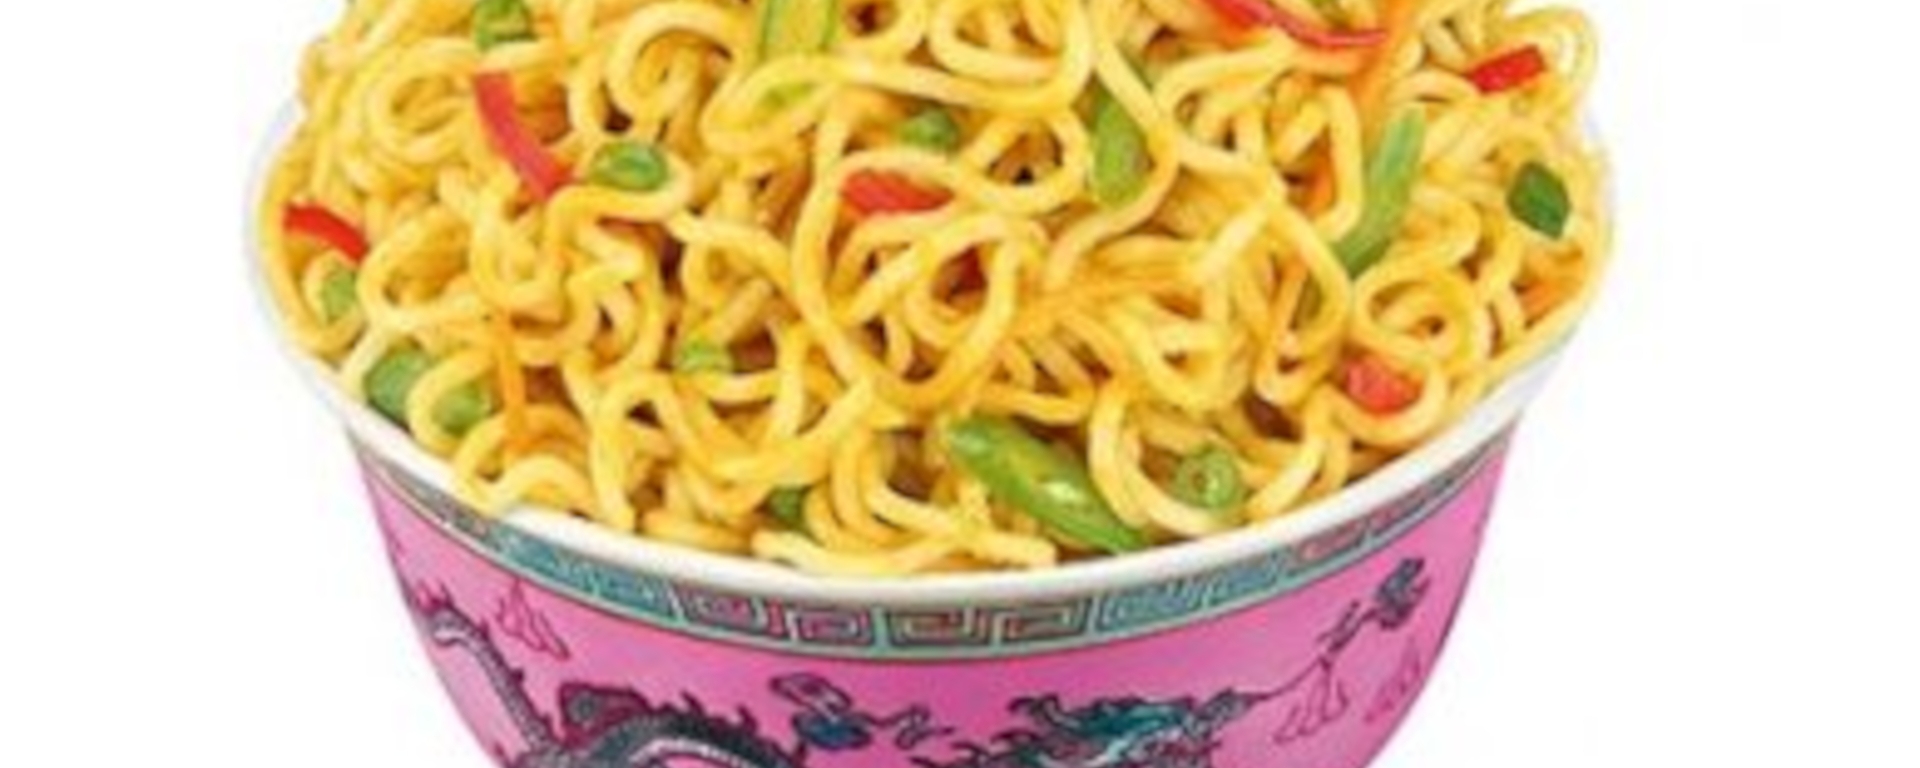 LuvMyRecipe.com - Singapore Instant Noodles featured